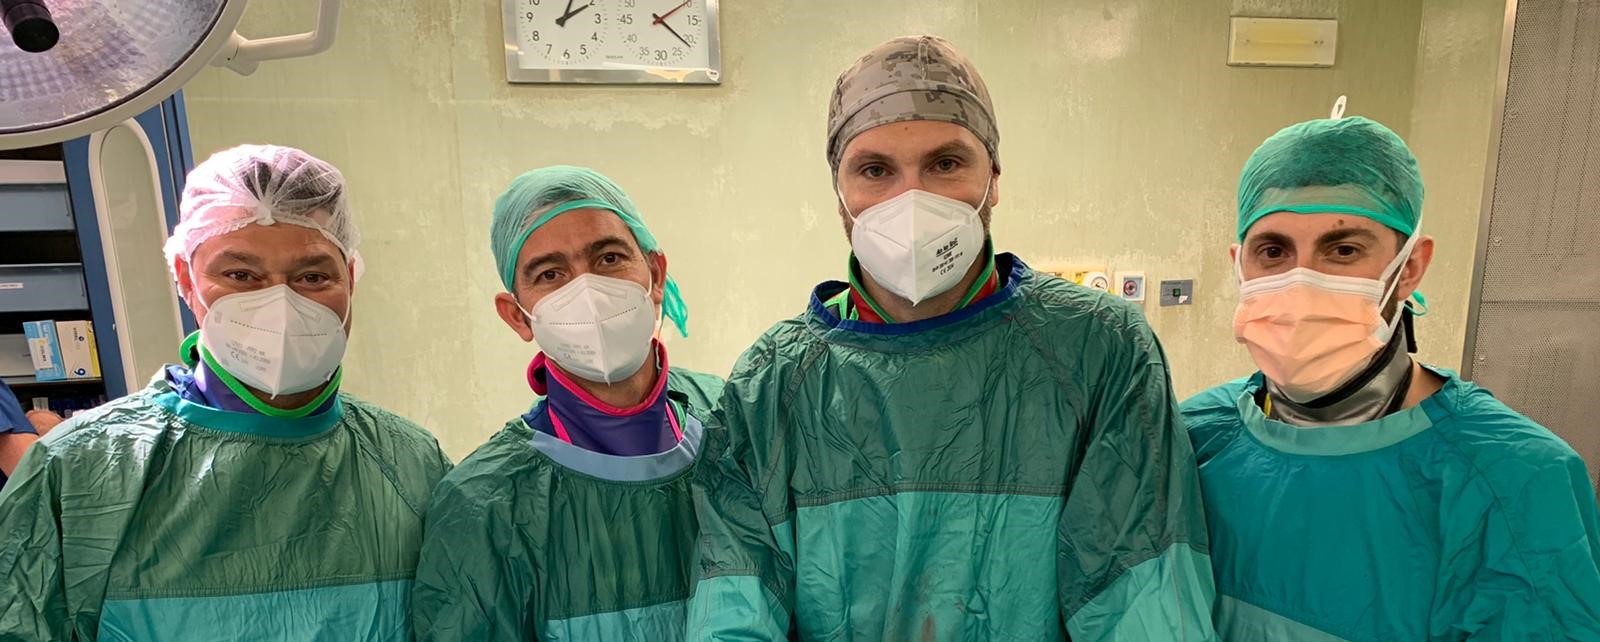 equipe chirurghi ortopedici dottor di giacomo lorenzo ospedale perugia